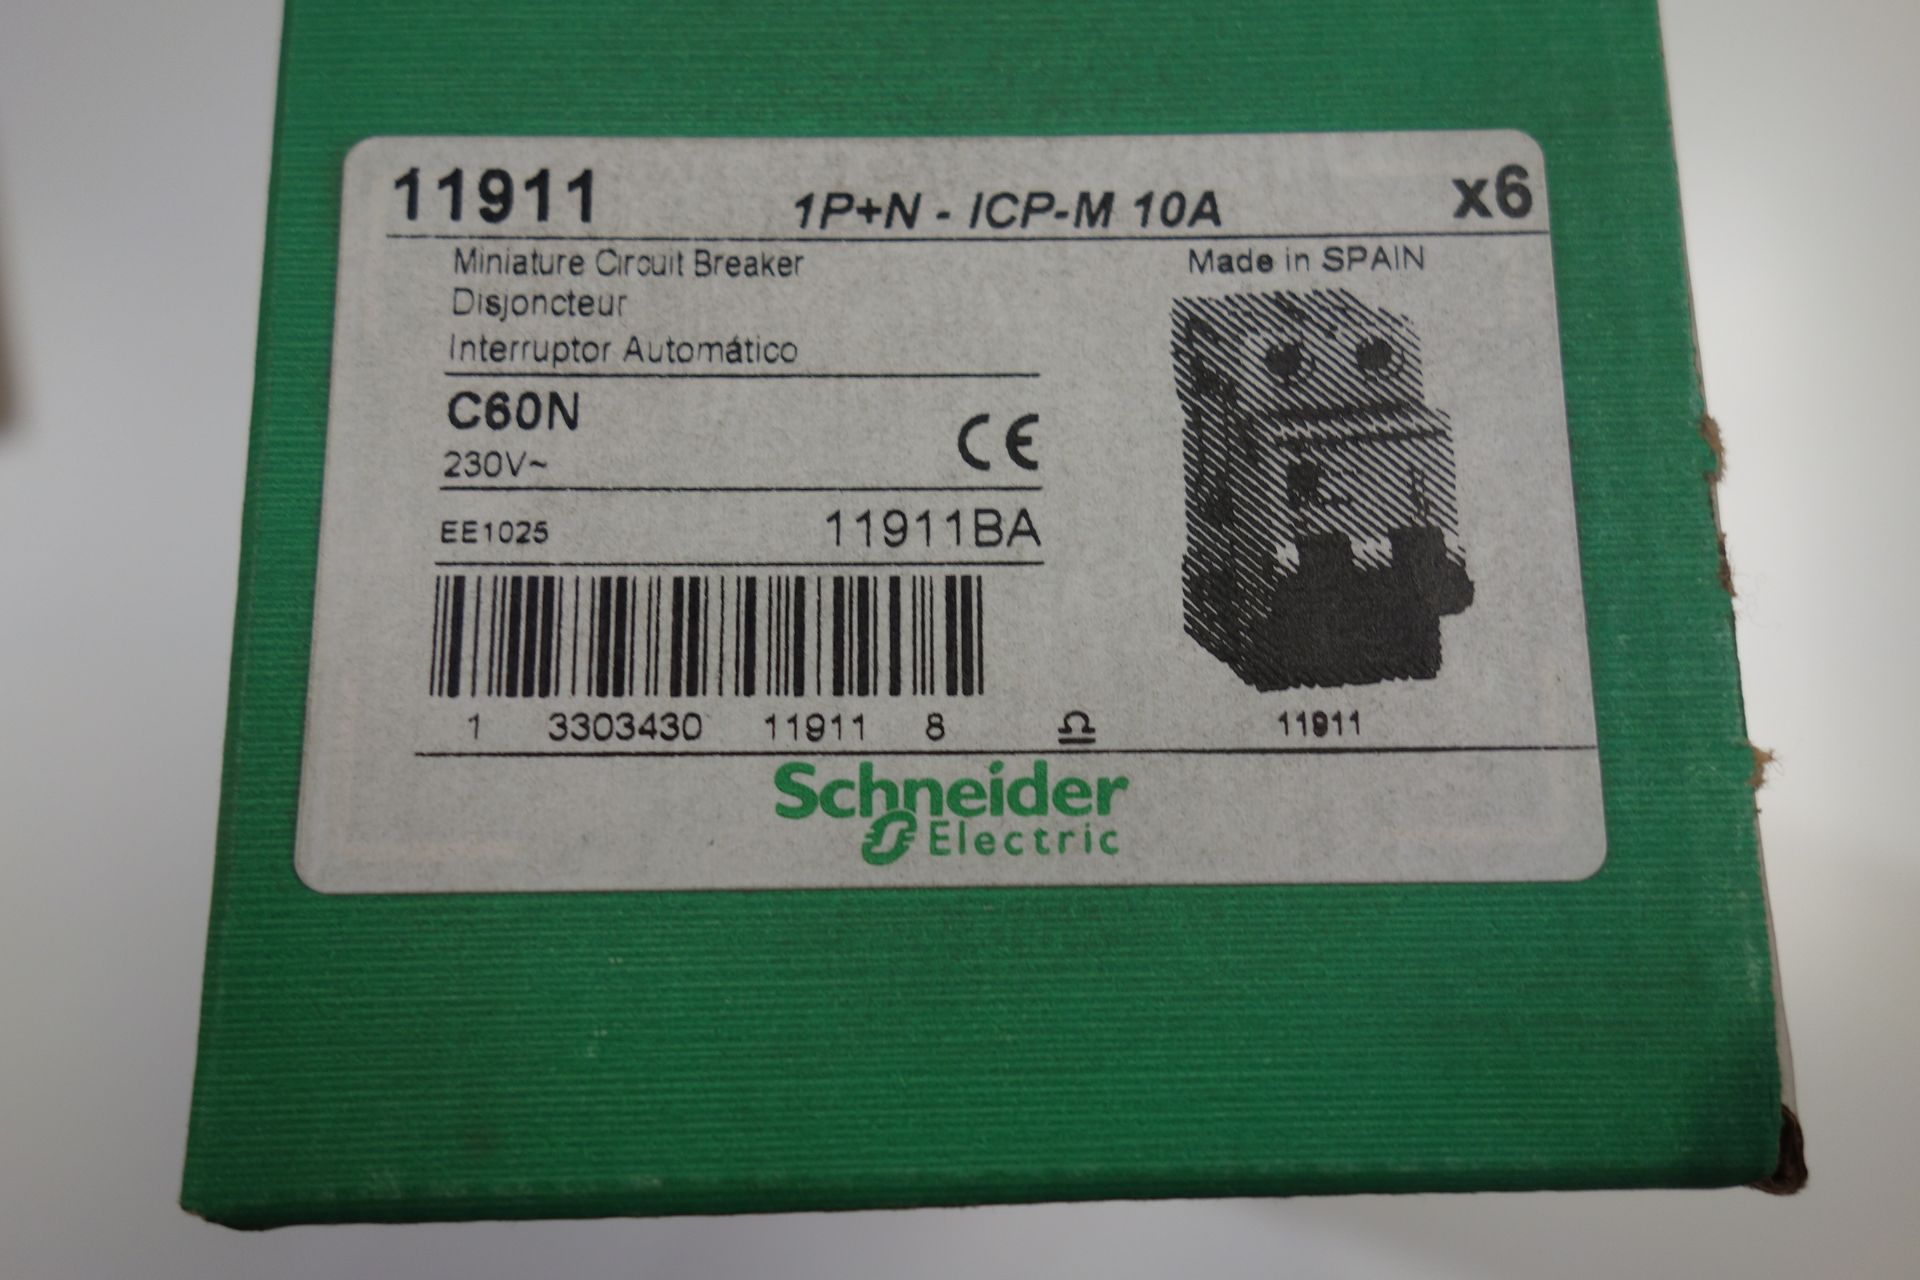 30 X Schneider 11911 1P+N-1CP-M-10A MCB